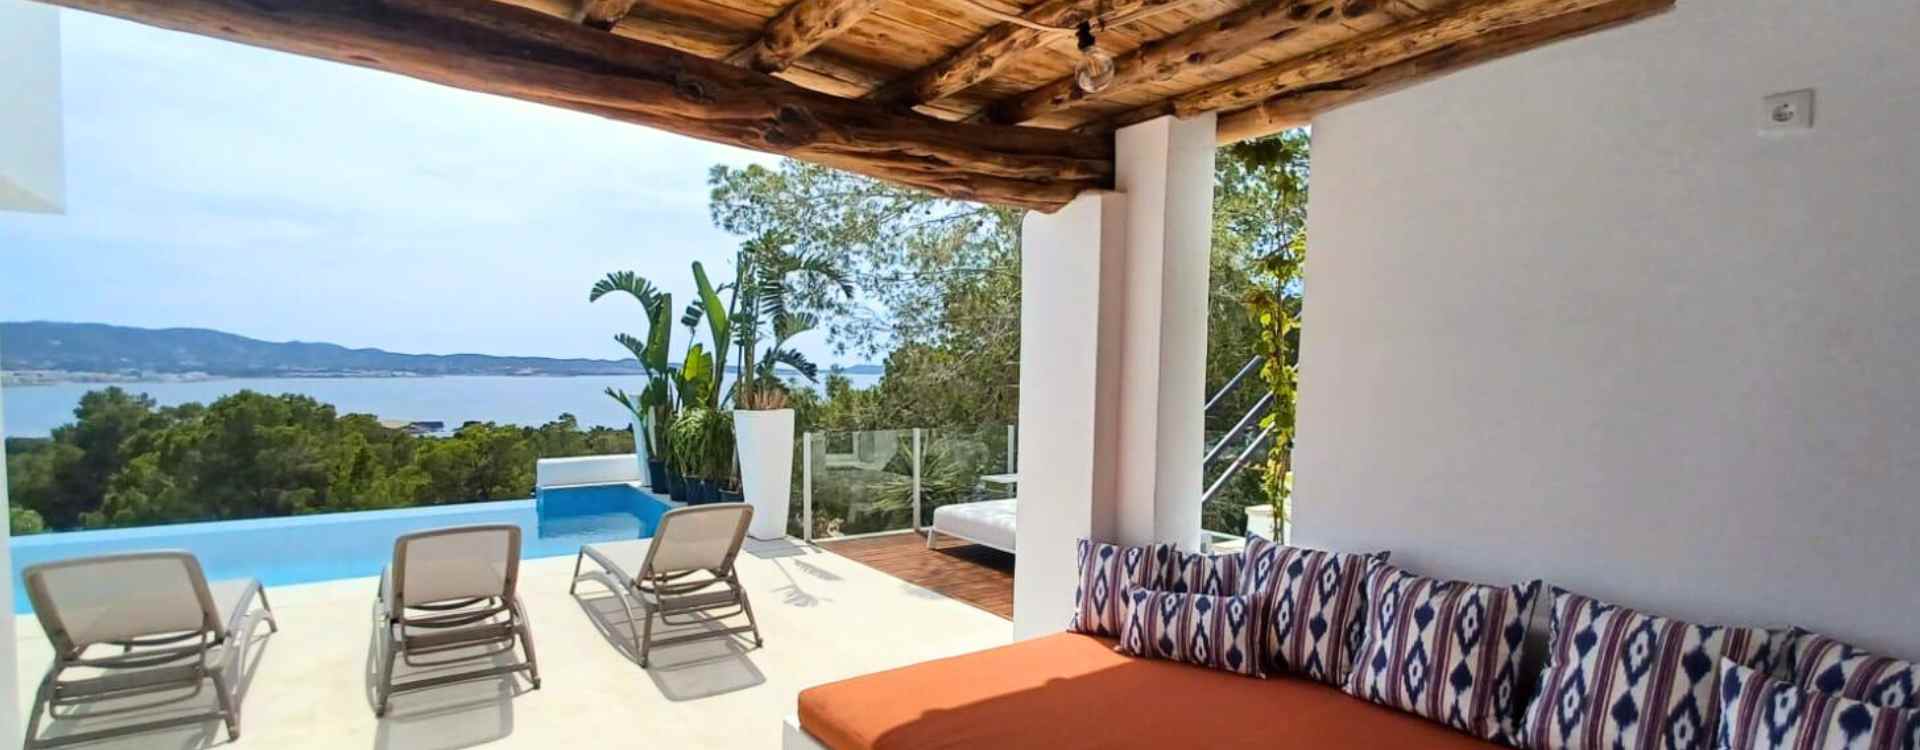 Villa Bedoin - Ibiza - infinity pool